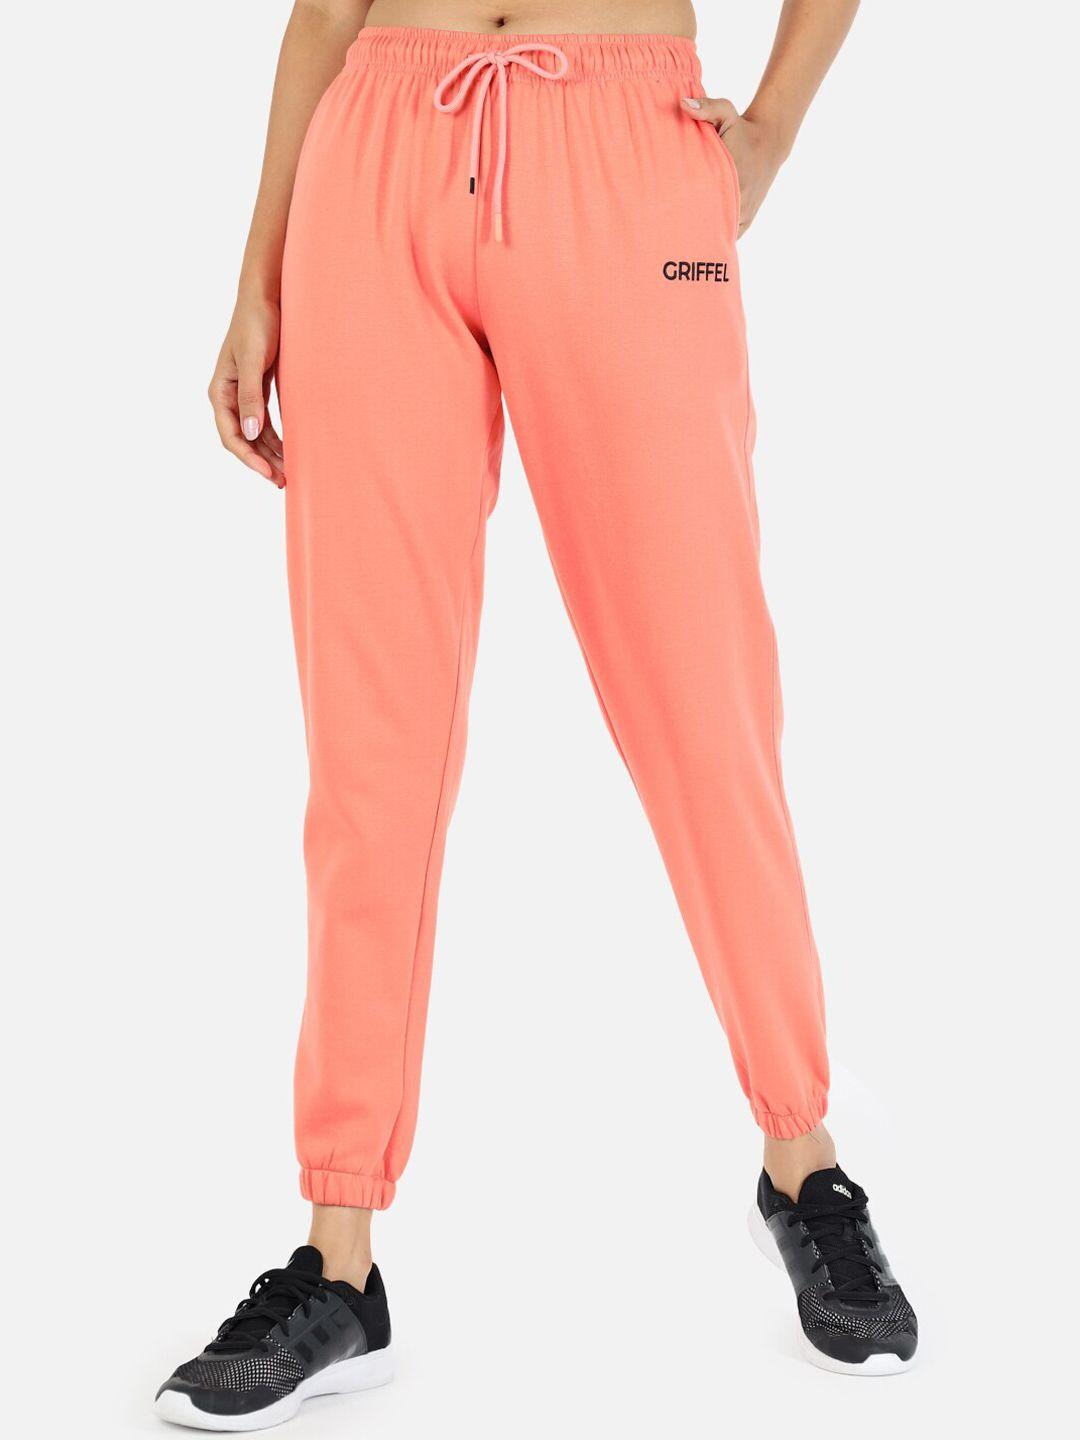 griffel-women-peach-coloured-solid-cotton-jogger